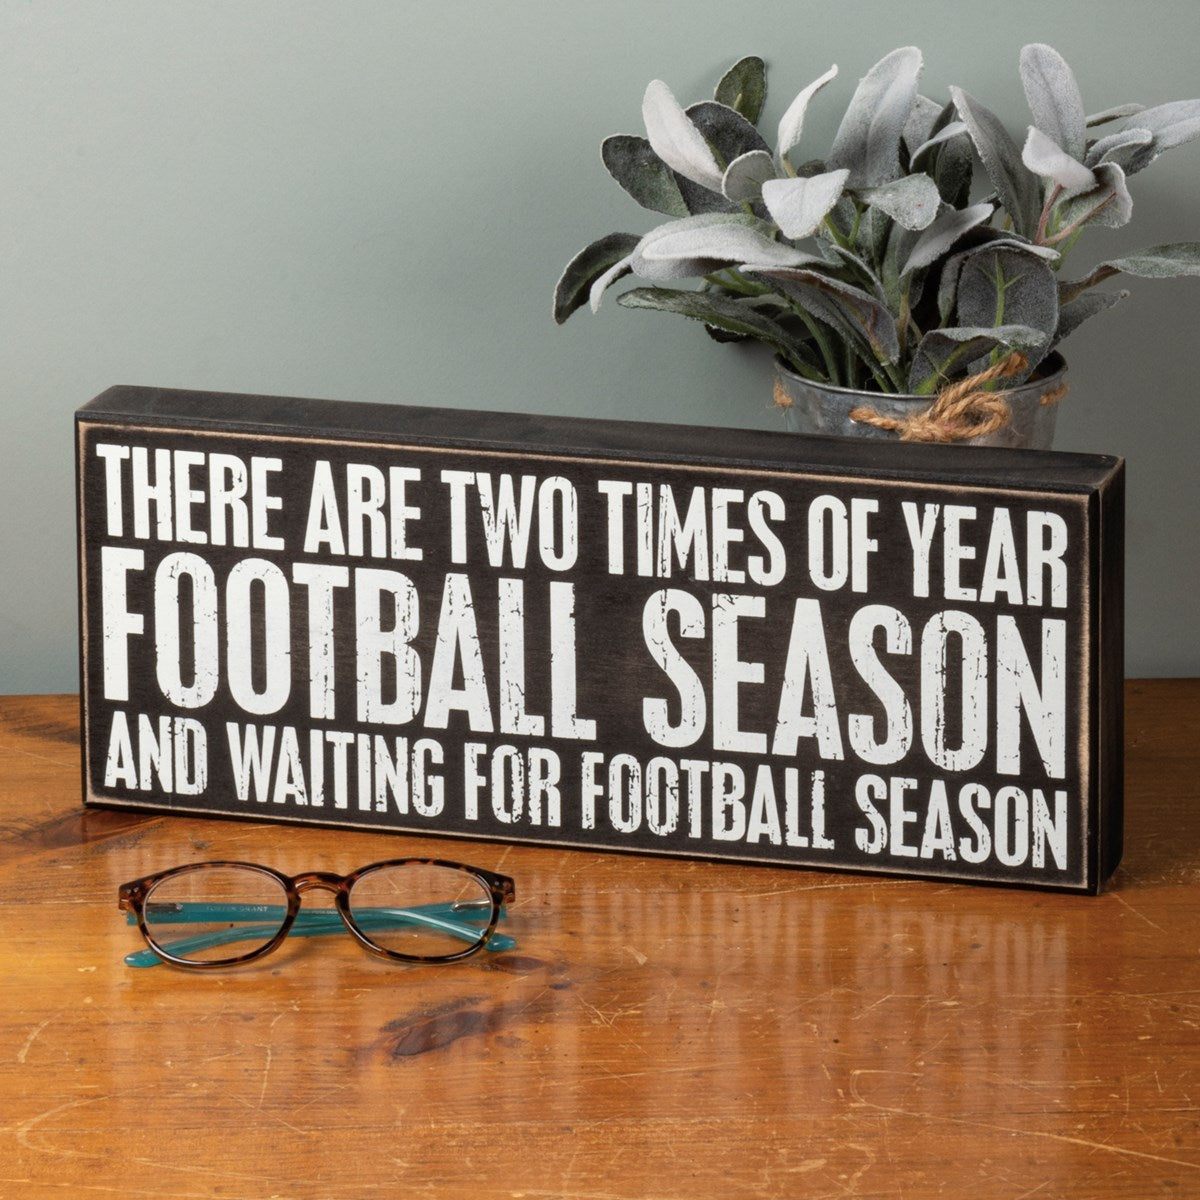 Two Times of Year Football Season & Waiting for Football Season 15" Sign